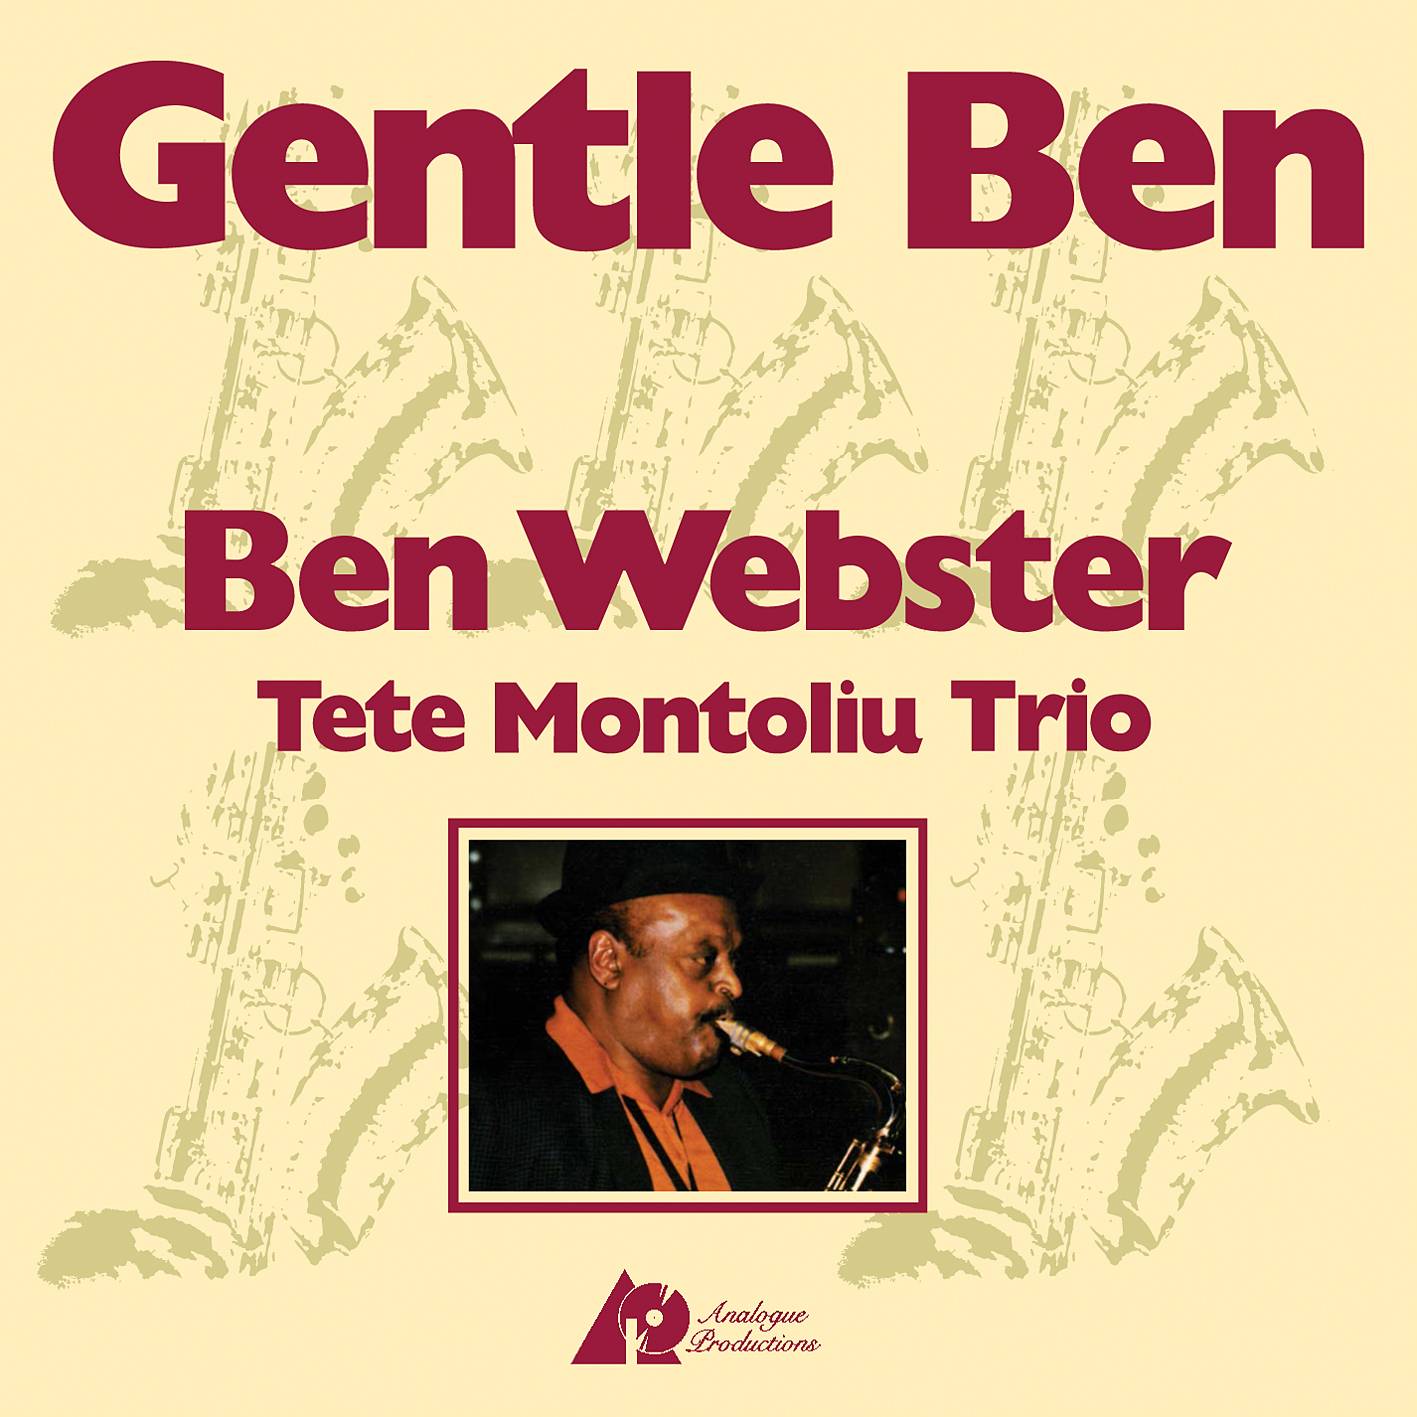 Ben Webster & Tete Montoliu Trio - Gentle Ben (1972) [Analogue Productions 2011] SACD ISO + FLAC 24bit/88,2kHz